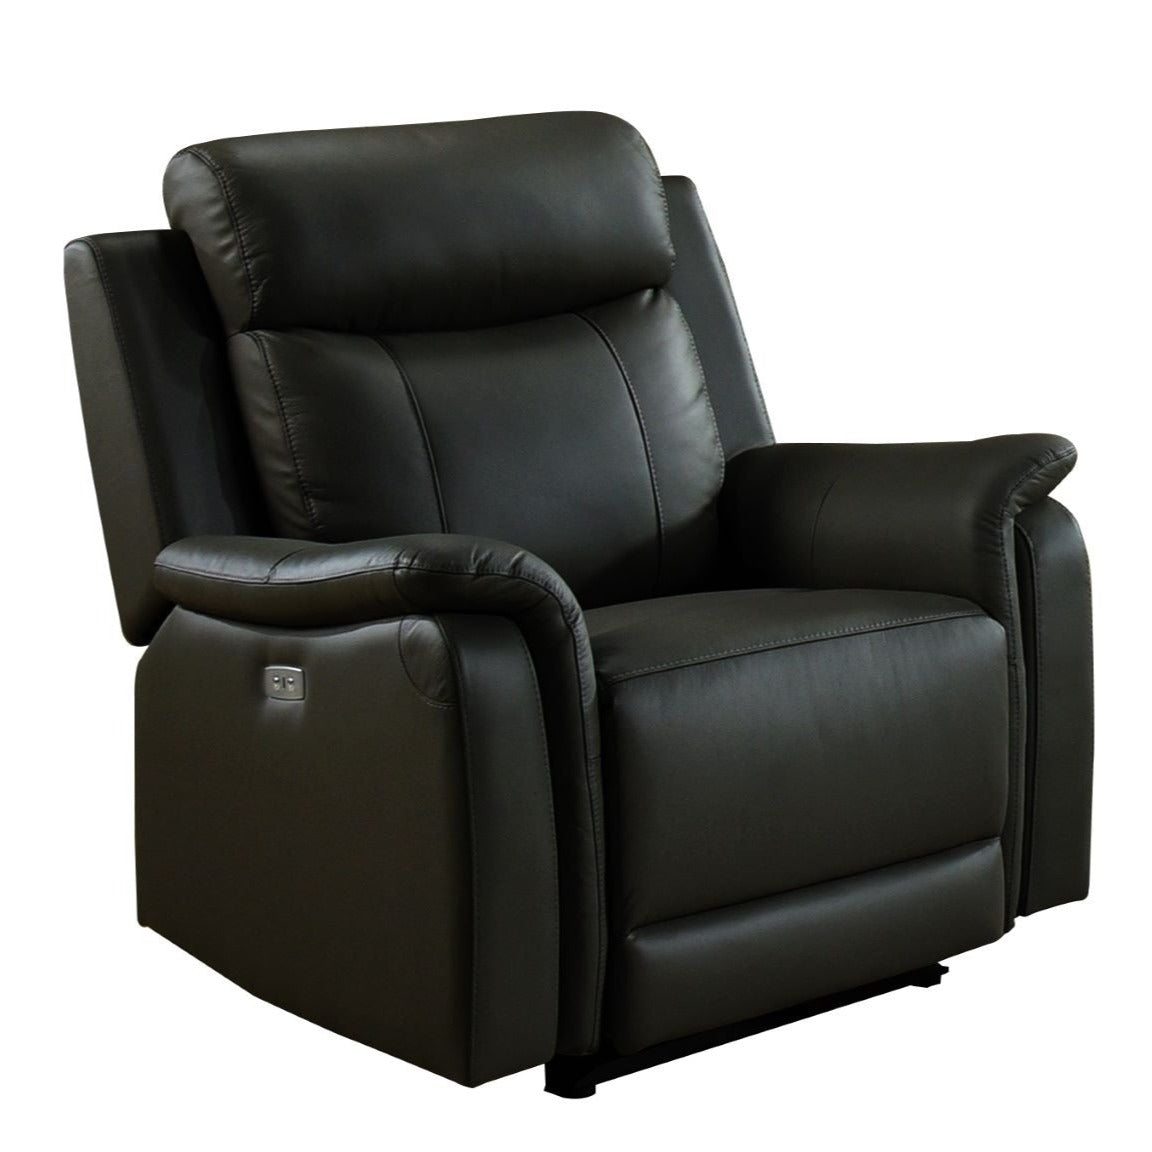 Cyrus Top Grain Leather Power Glider Recliner Chair Black 99840